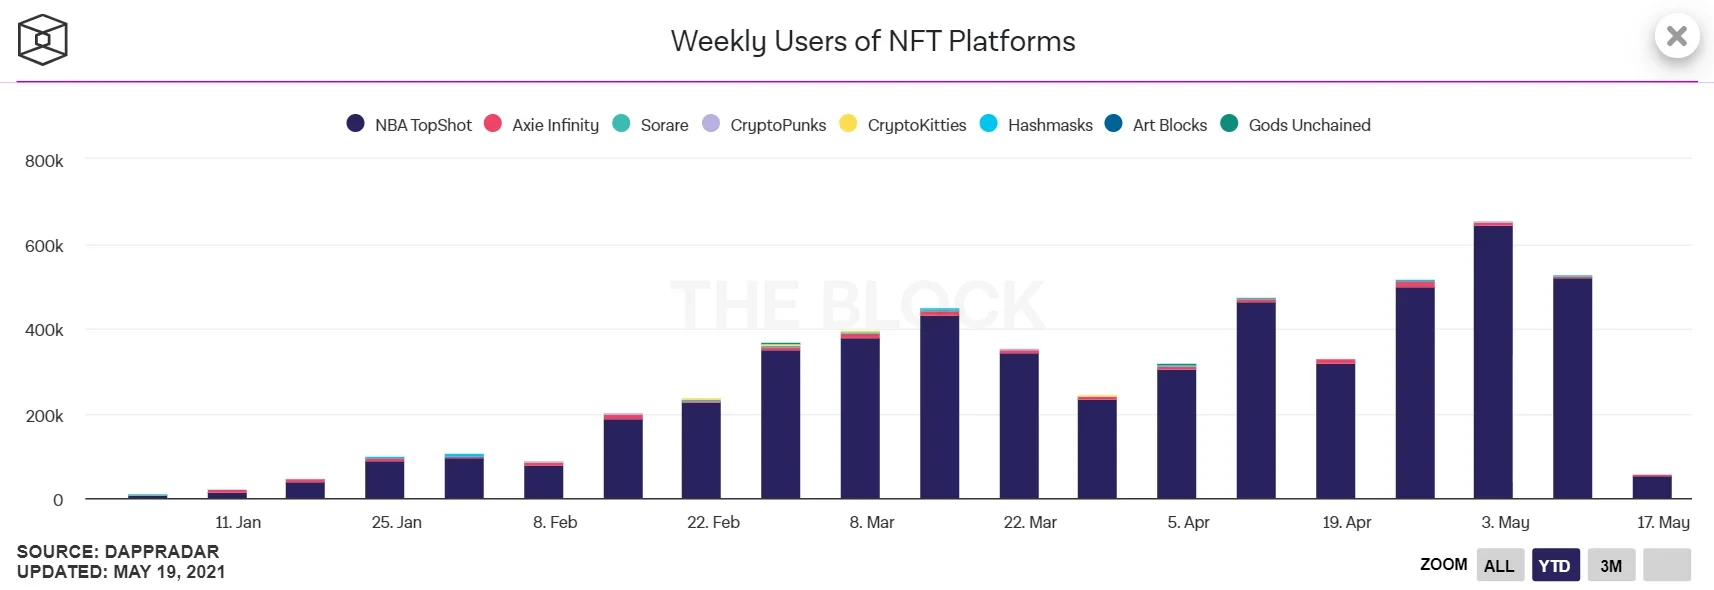 Weekly Users of NFT Platforms